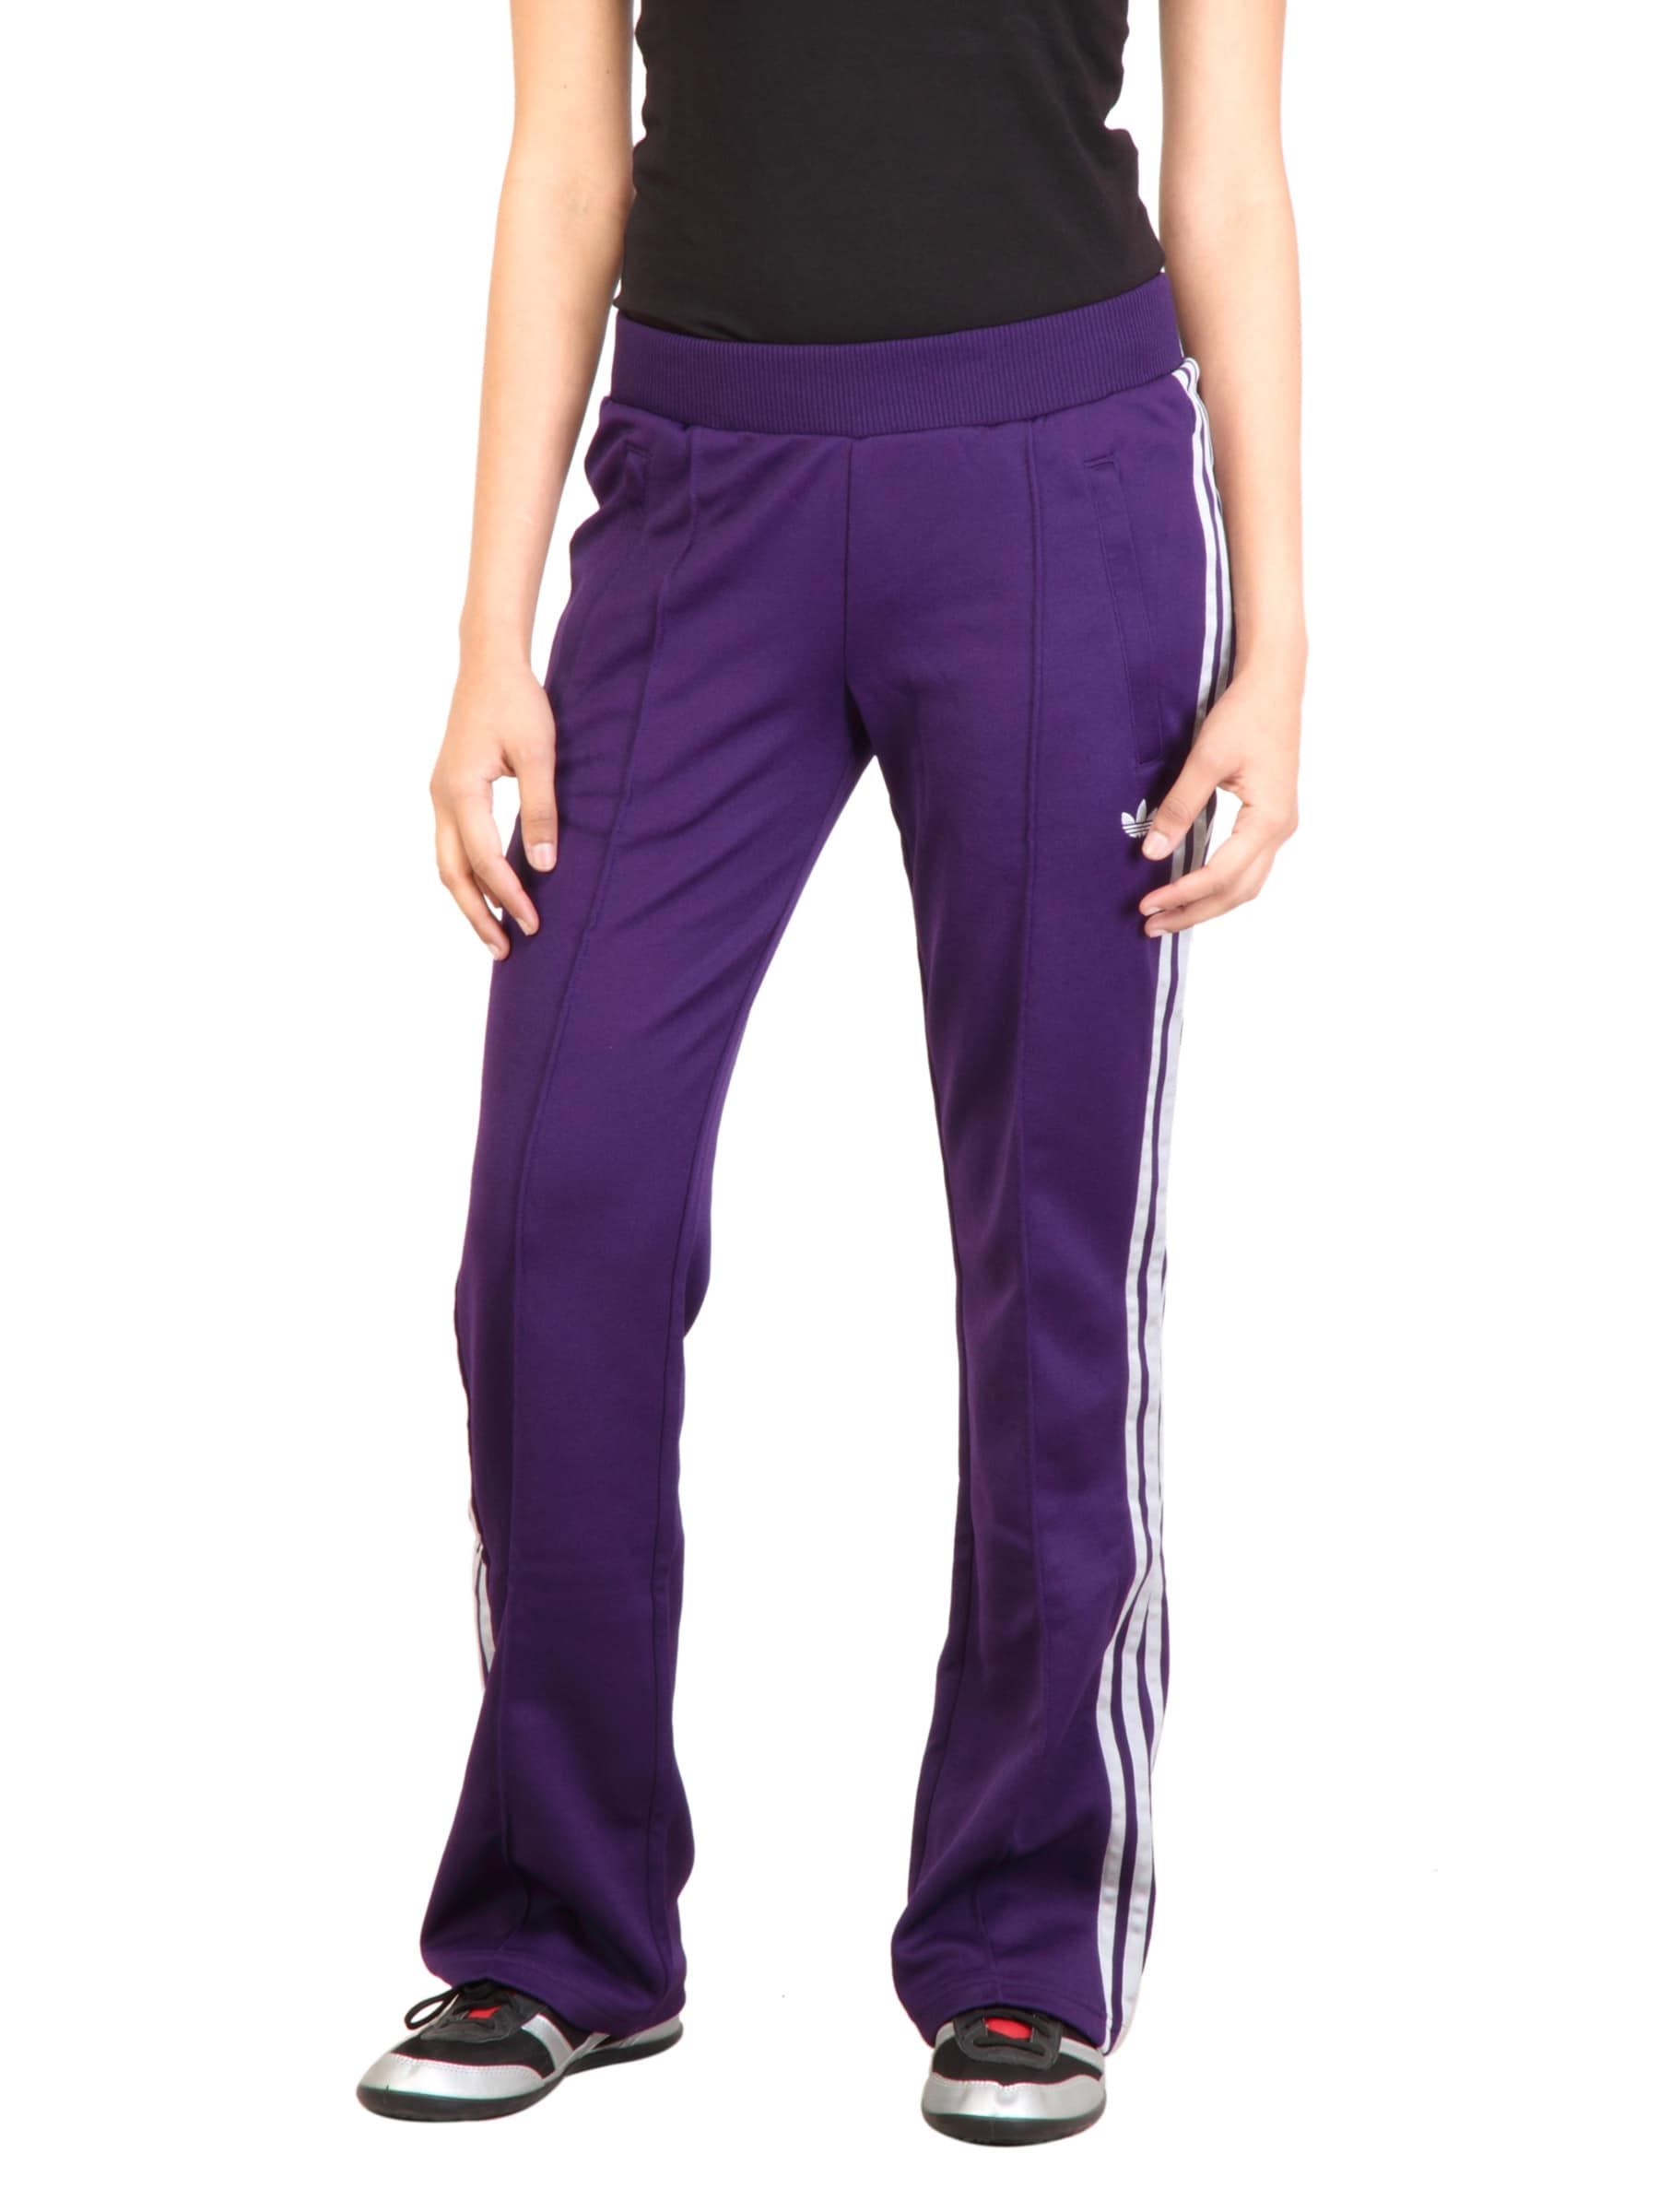 ADIDAS Originals Women Flock Purple Track Pants